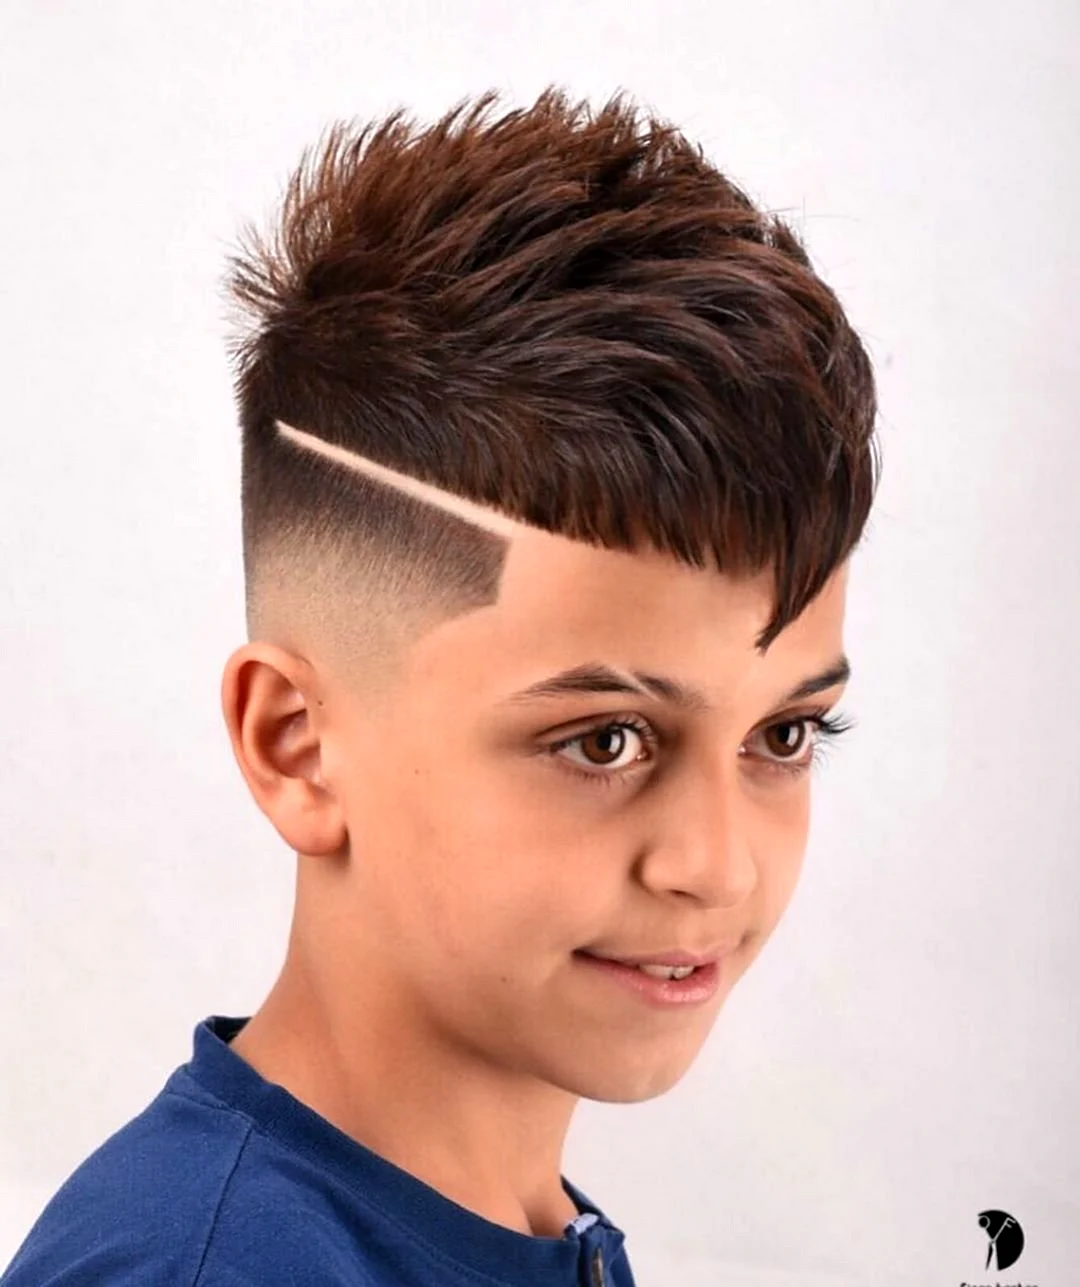 Boys Hairstyle стрижка